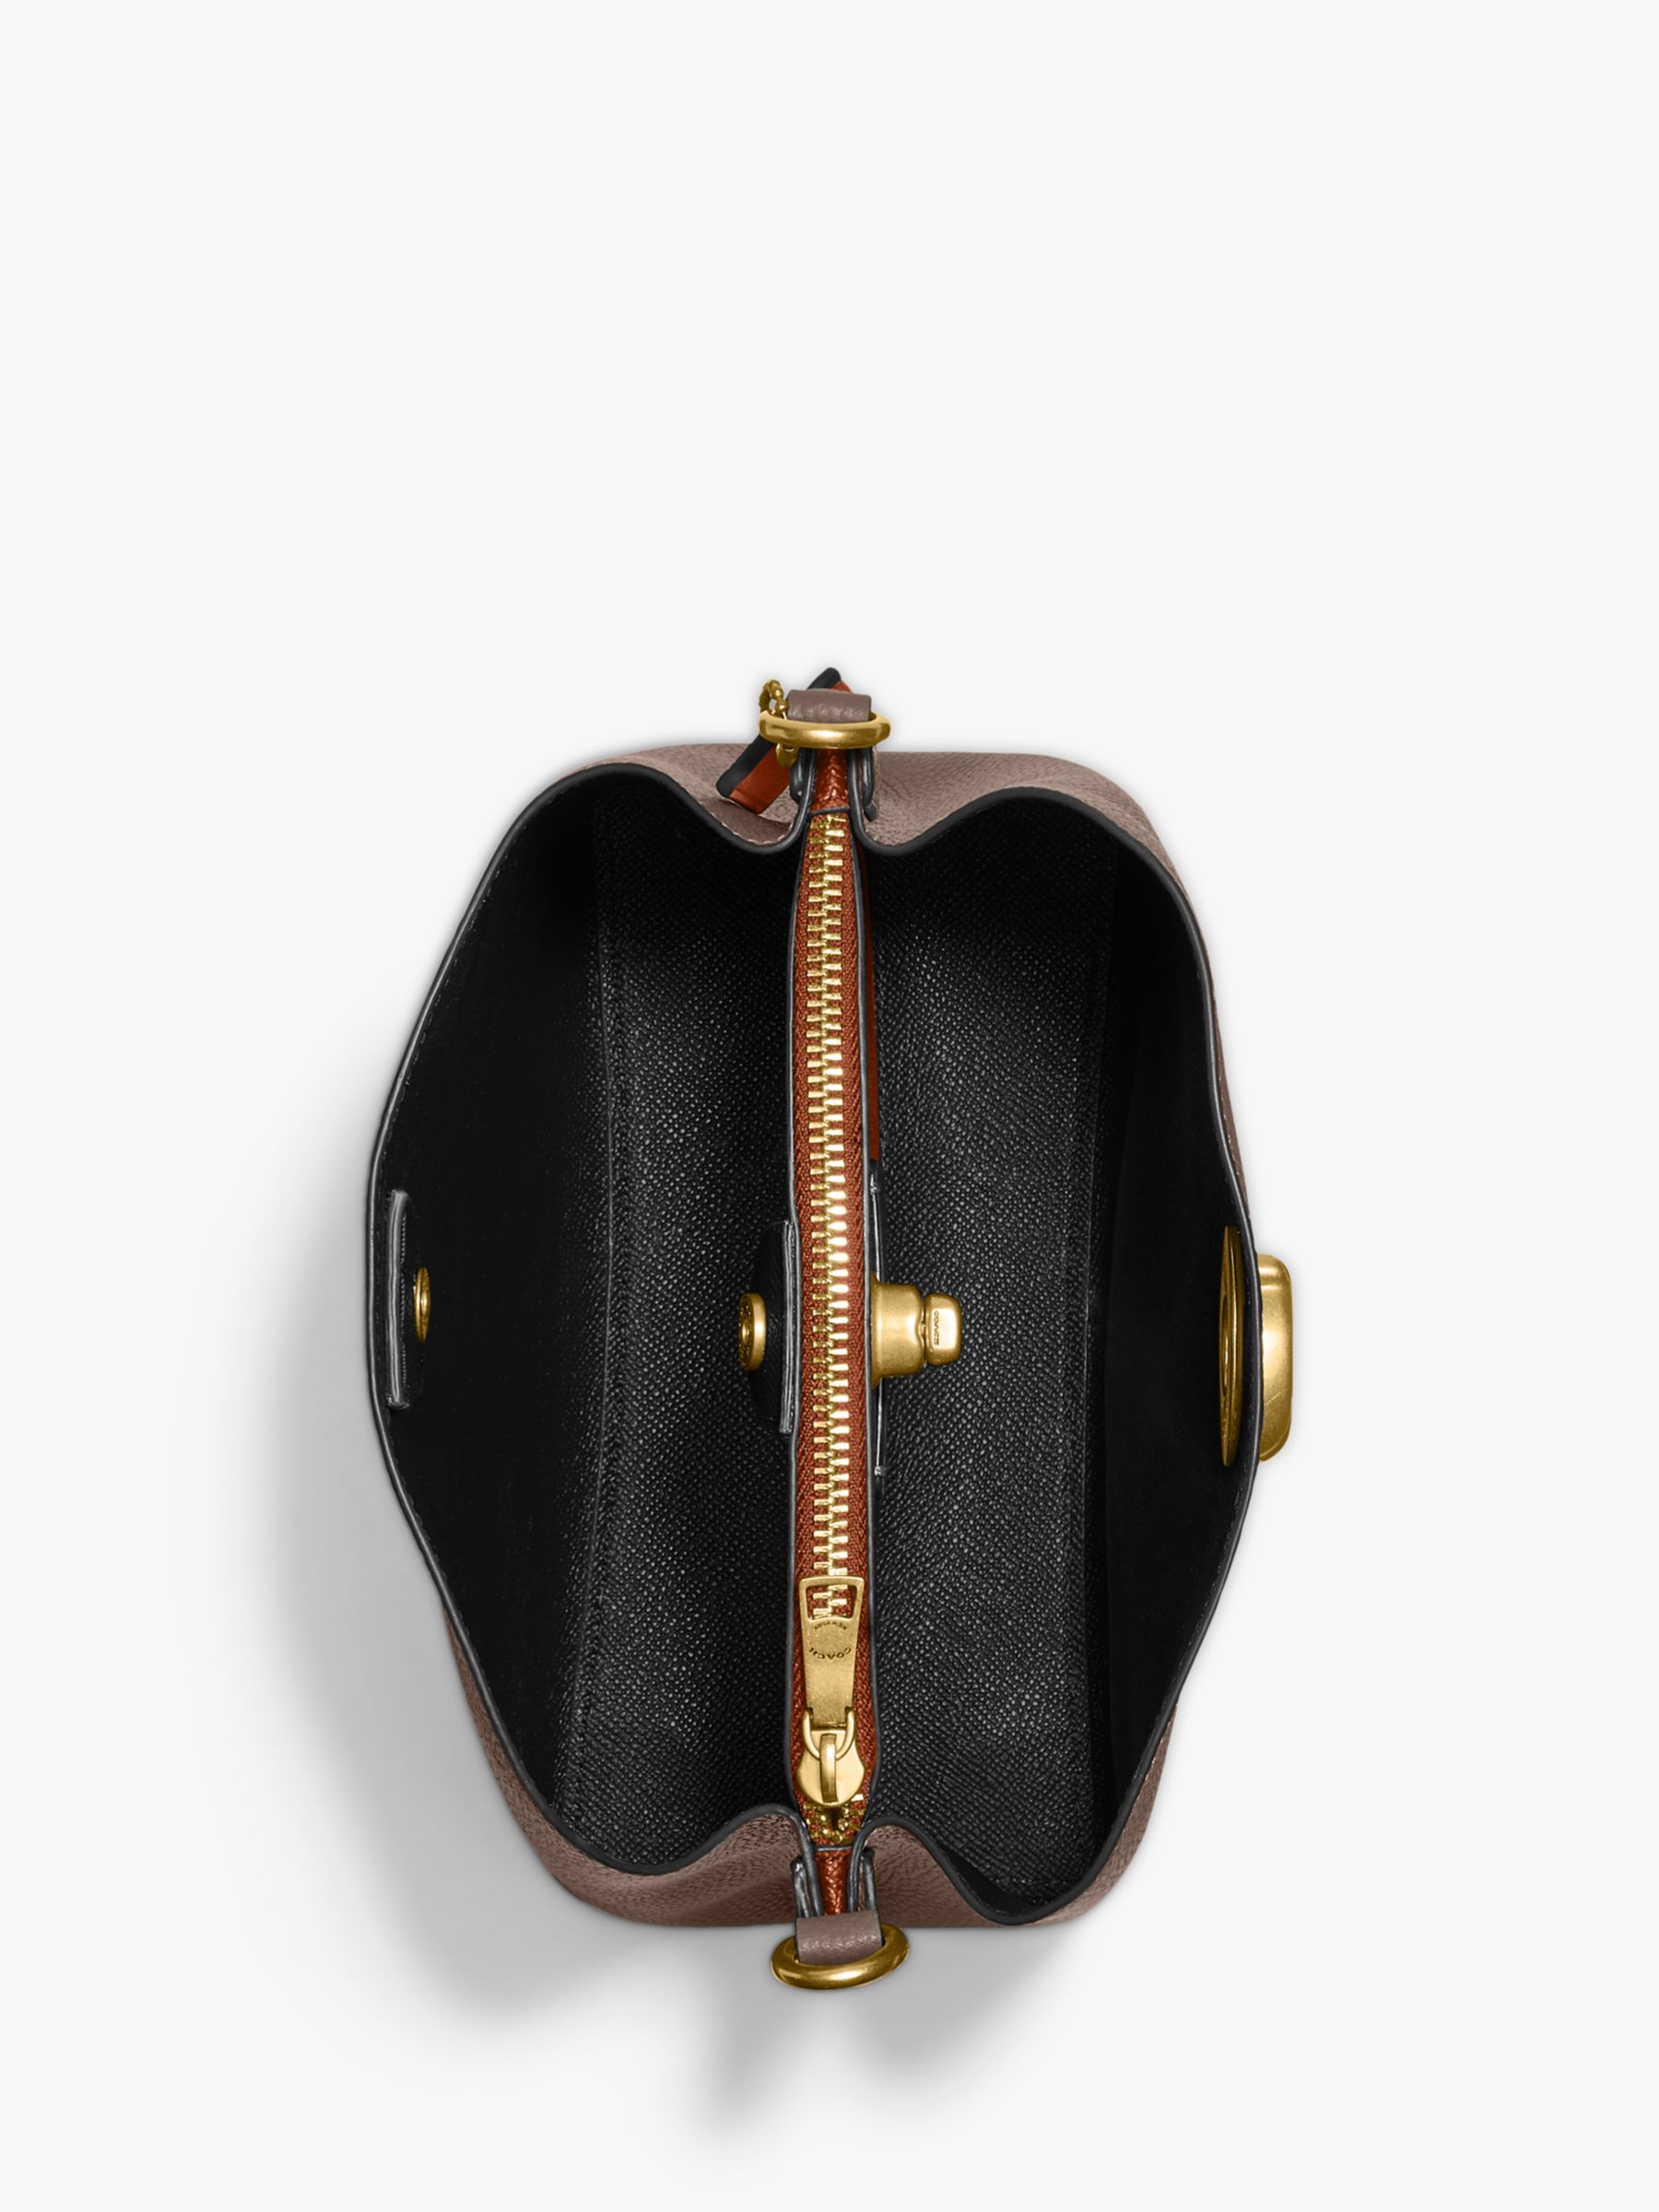 Coach Colorblock Leather Willow Bucket, Dark Stone, One Size: Handbags